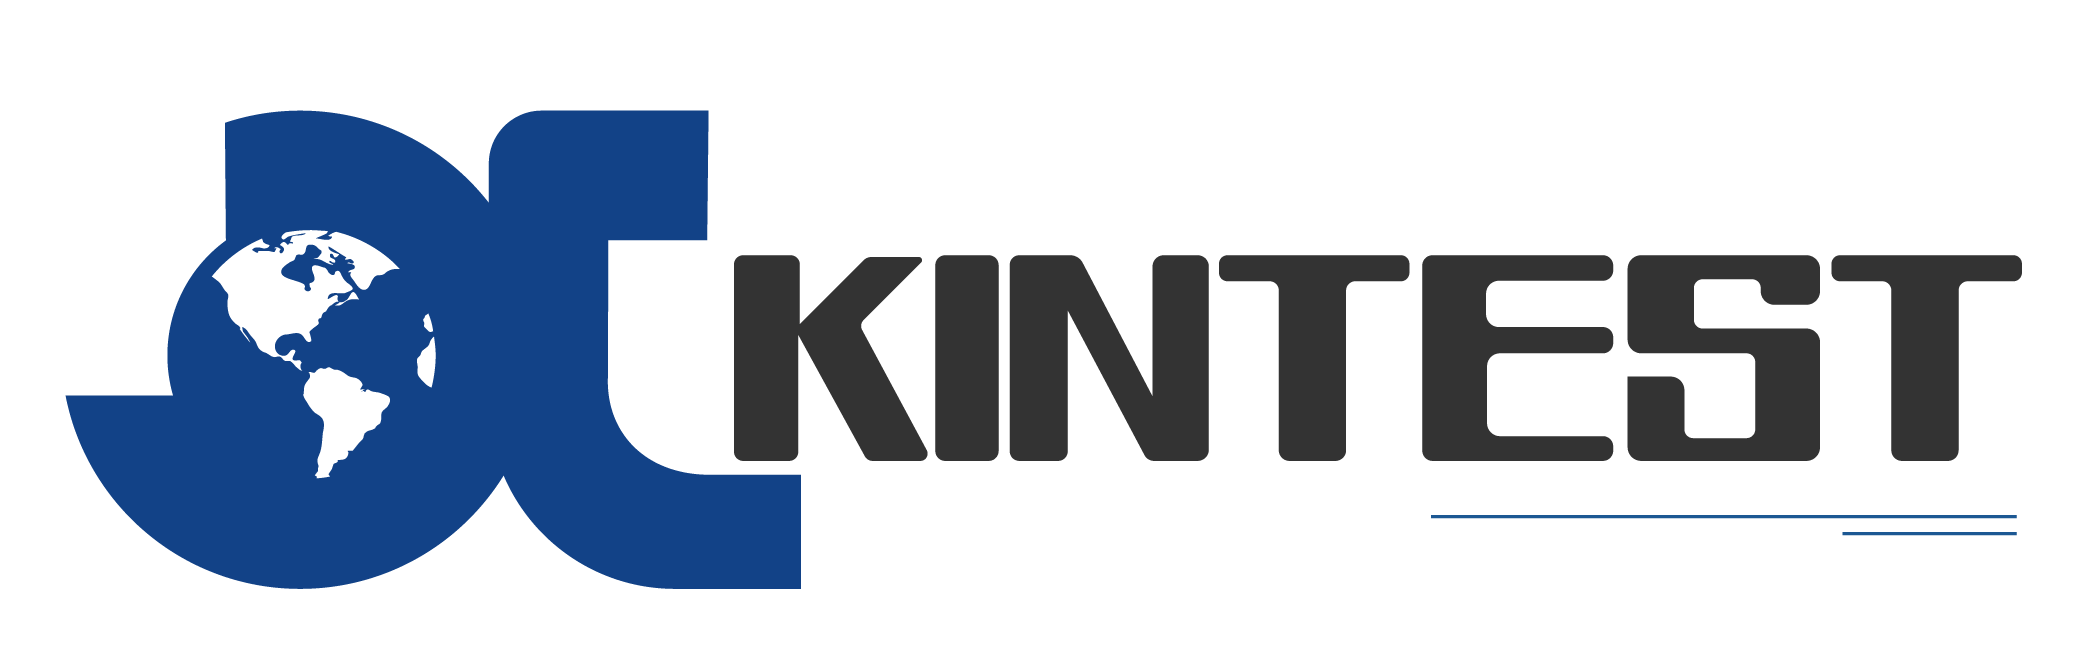 kintest logo